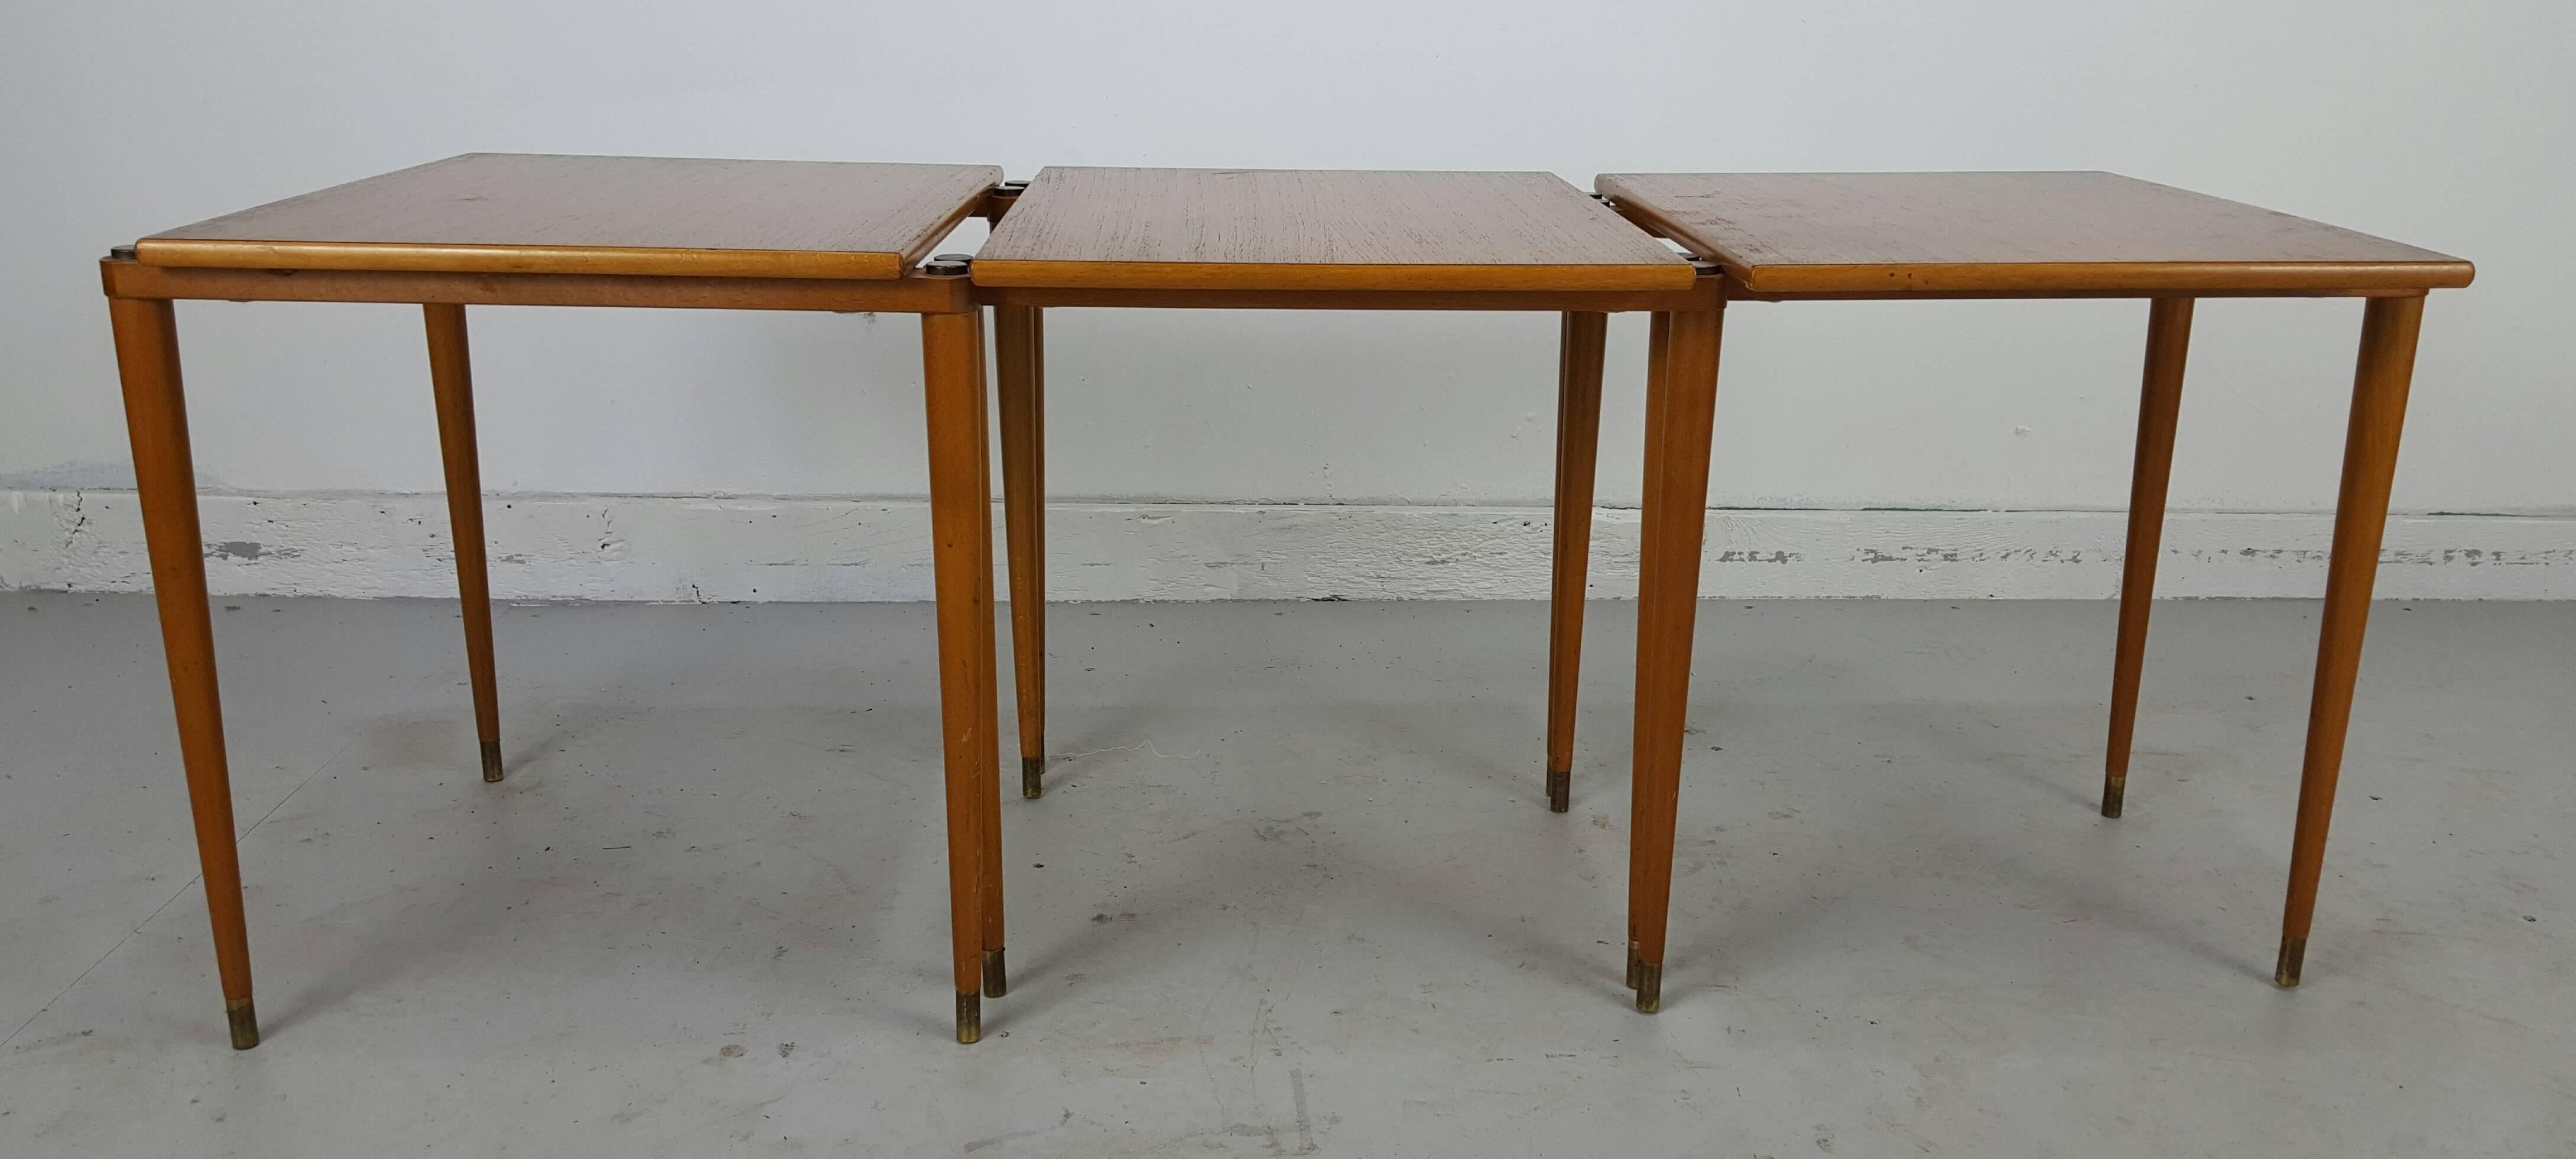 Danish stackable tables manner of Jens Quistgaard for Nissen. Classic modernist, pencil taper legs, nice brass button detail, measure 20